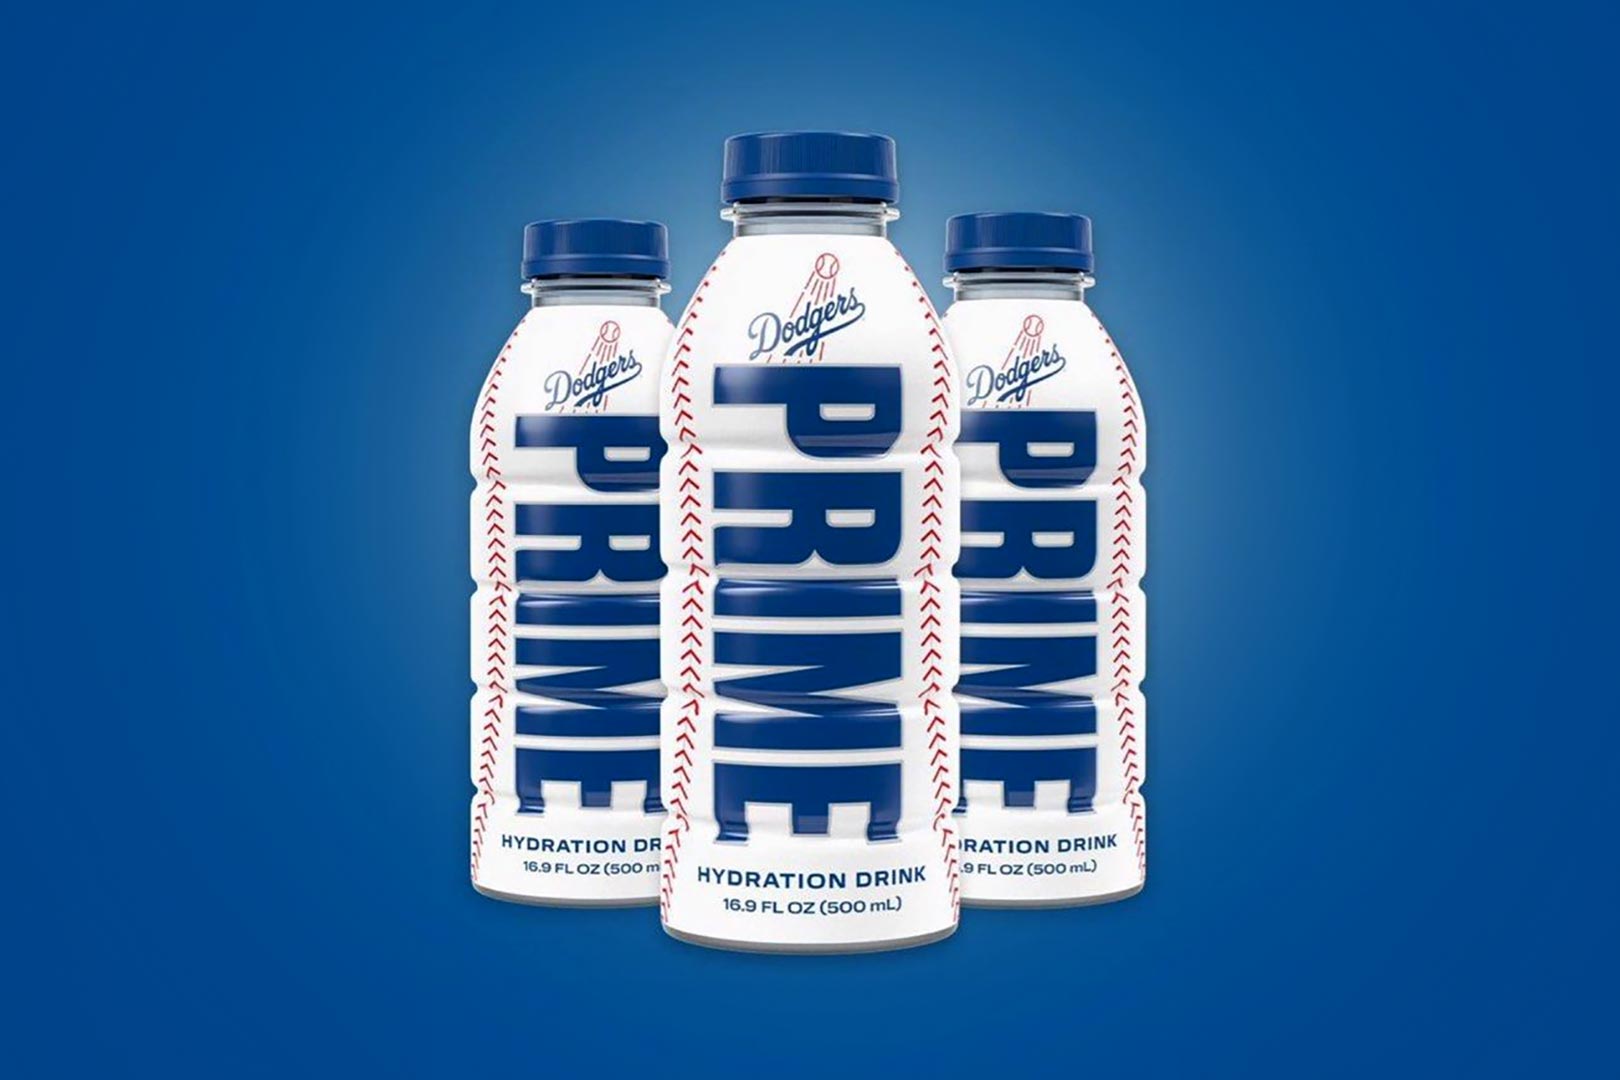 Dodgers Prime Hydratation Drink